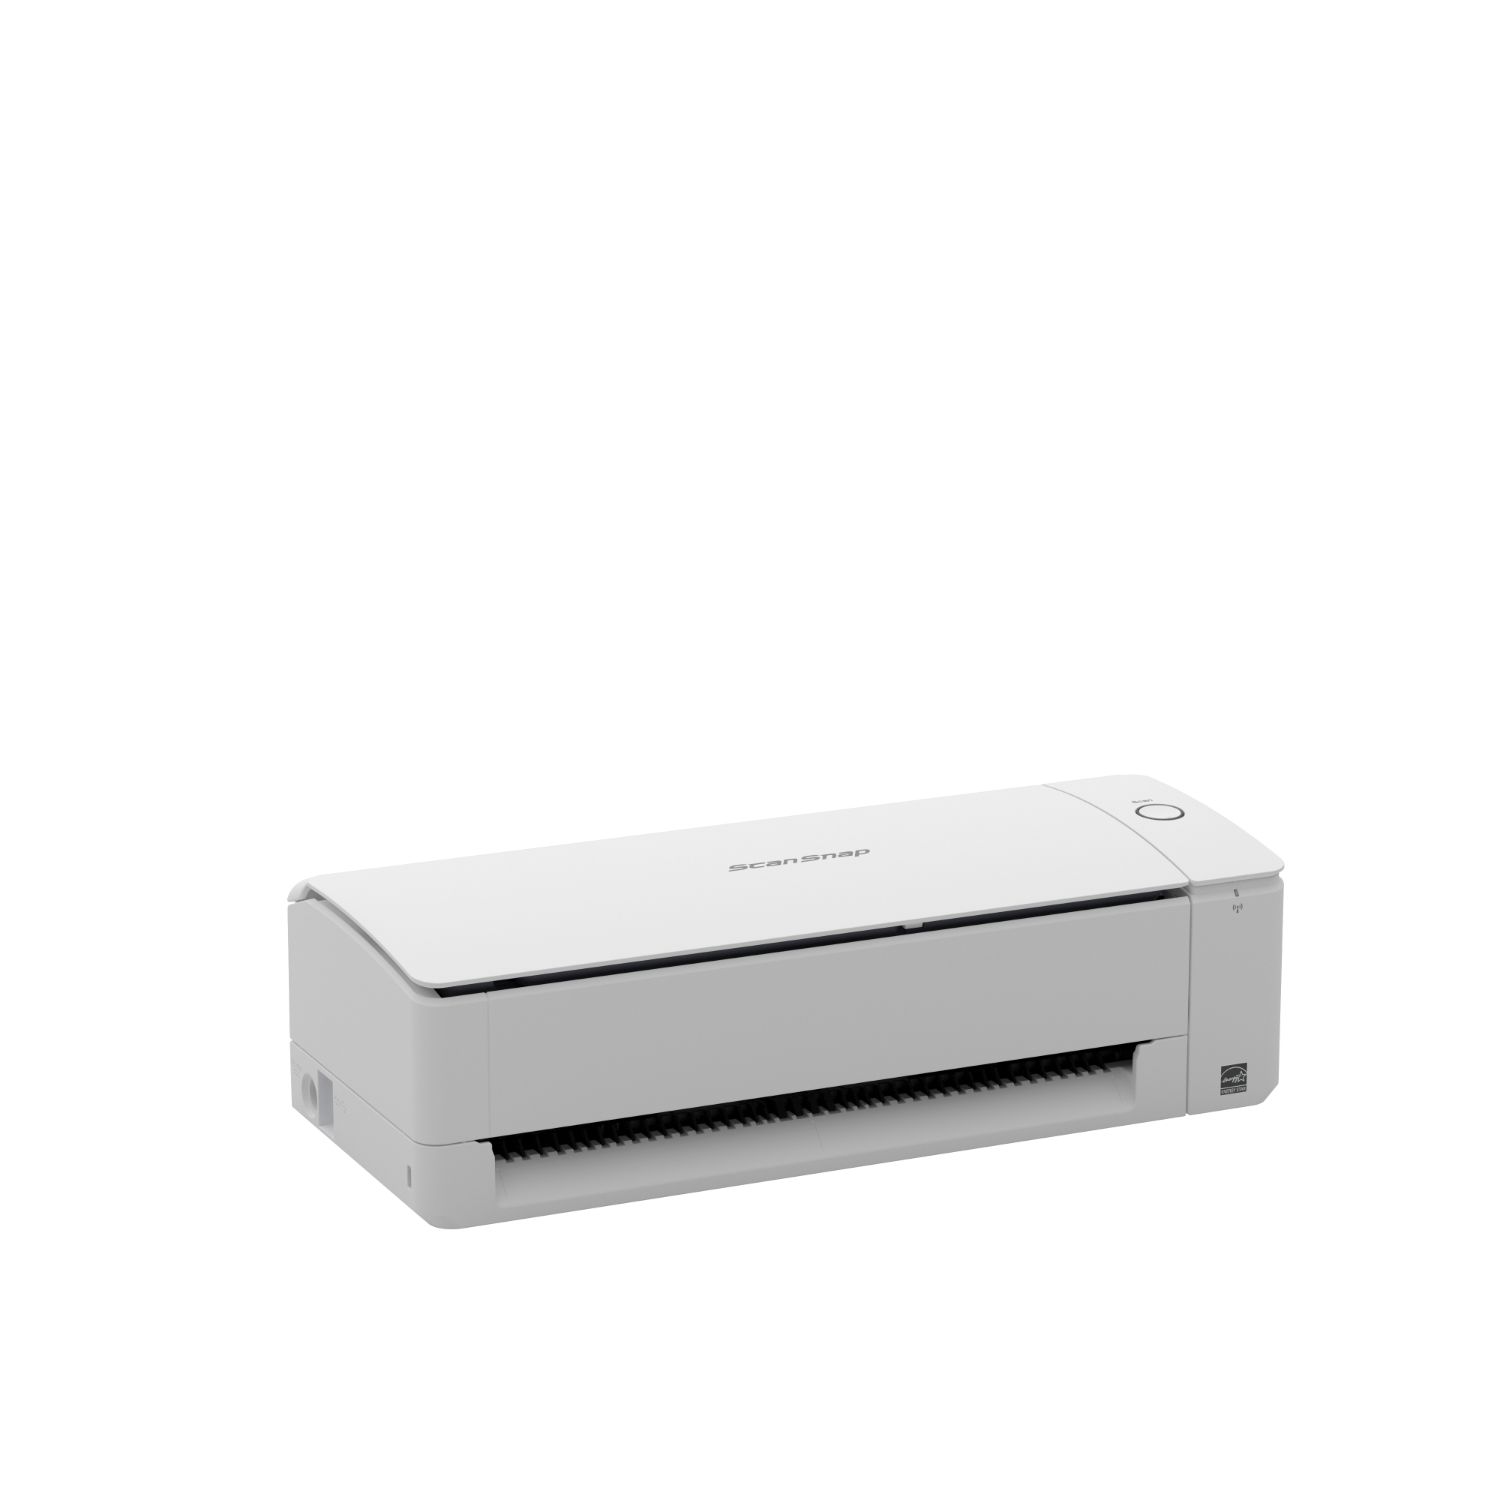 PA03805-B001 - Escner Documental Fujitsu ScanSnap iX1300 A4 USB-B 2.0/3.0 600dpi WiFi Blanco (PA03805-B001)